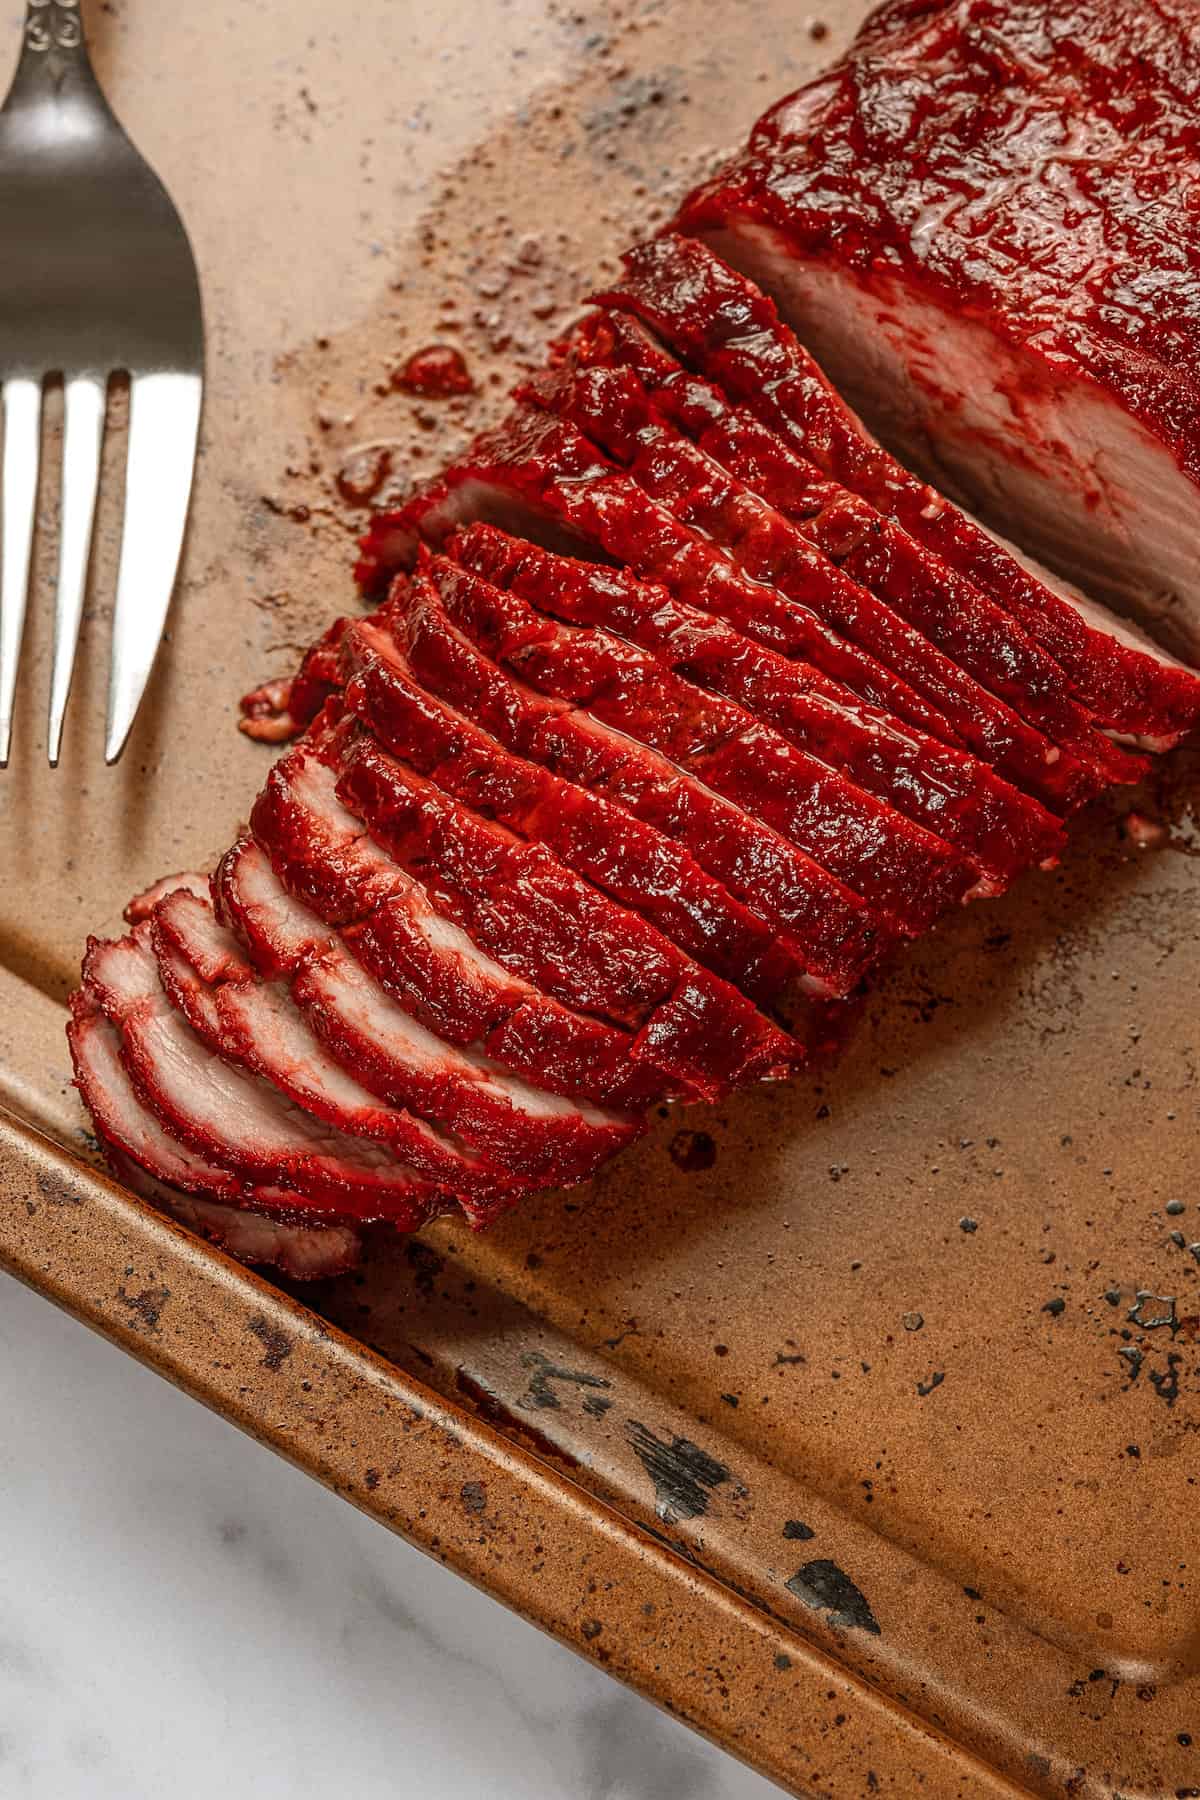 Char siu pork loin sliced thinly on a wooden cutting board.